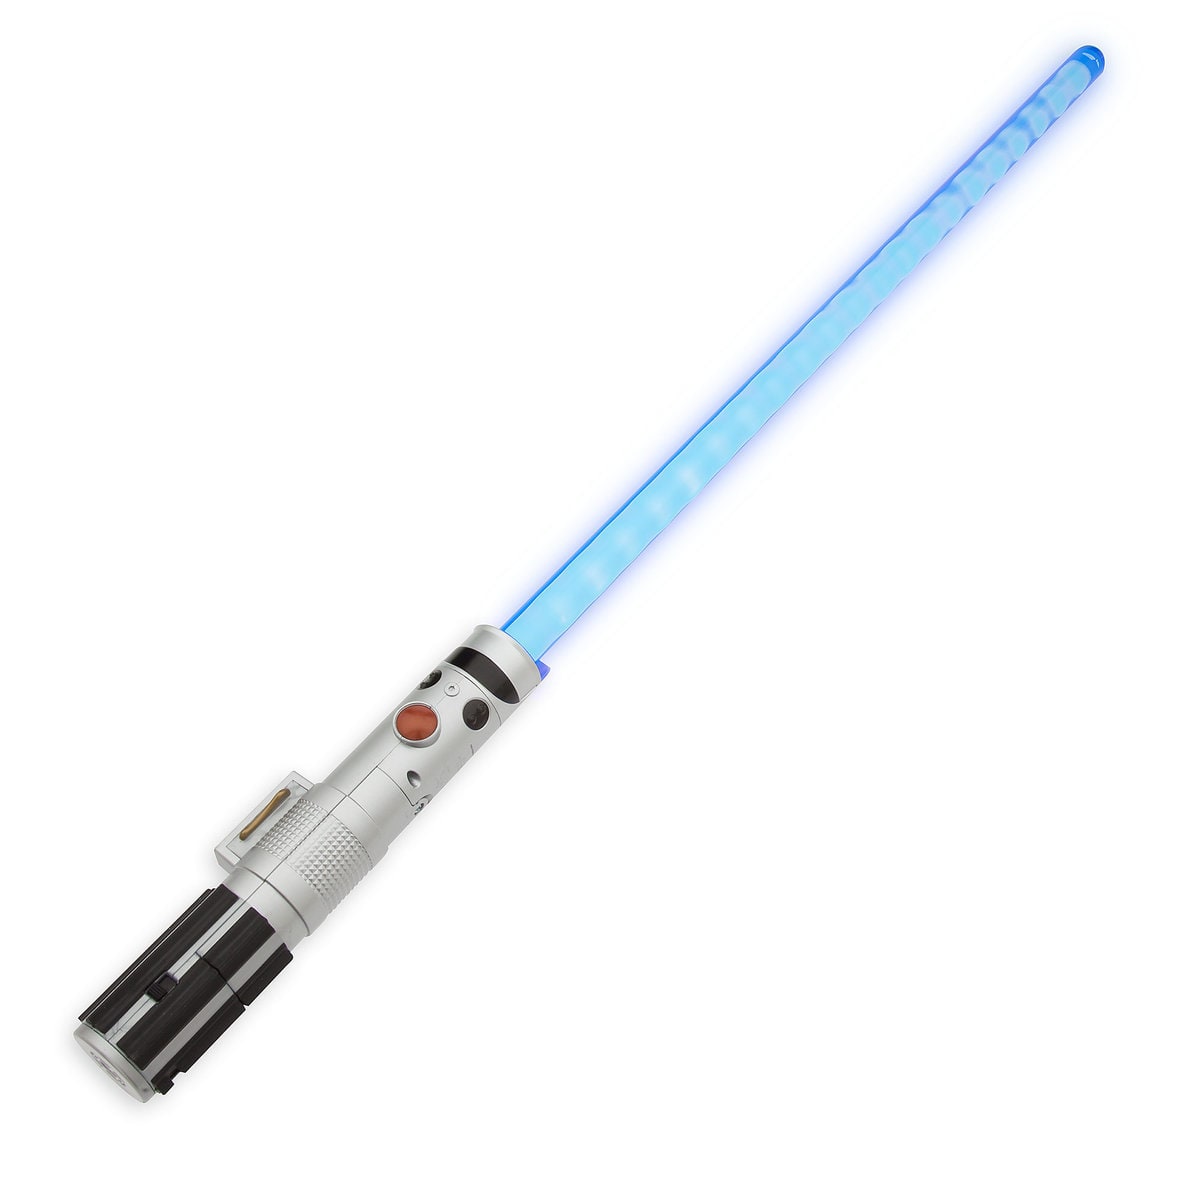 Disney Rey Lightsaber Star Wars The Last Jedi New with Box